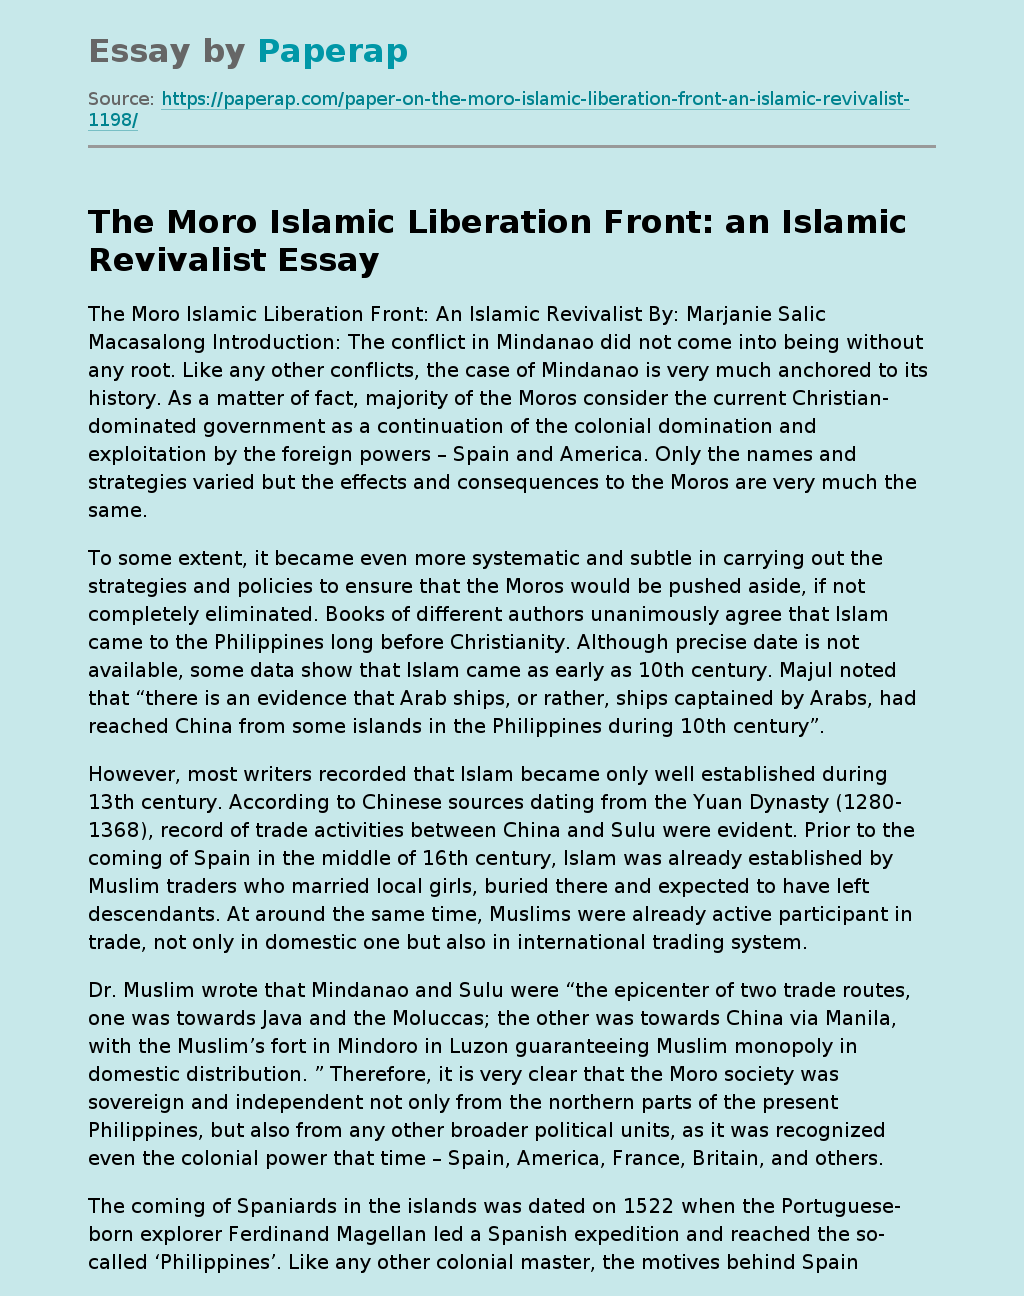 The Moro Islamic Liberation Front: an Islamic Revivalist